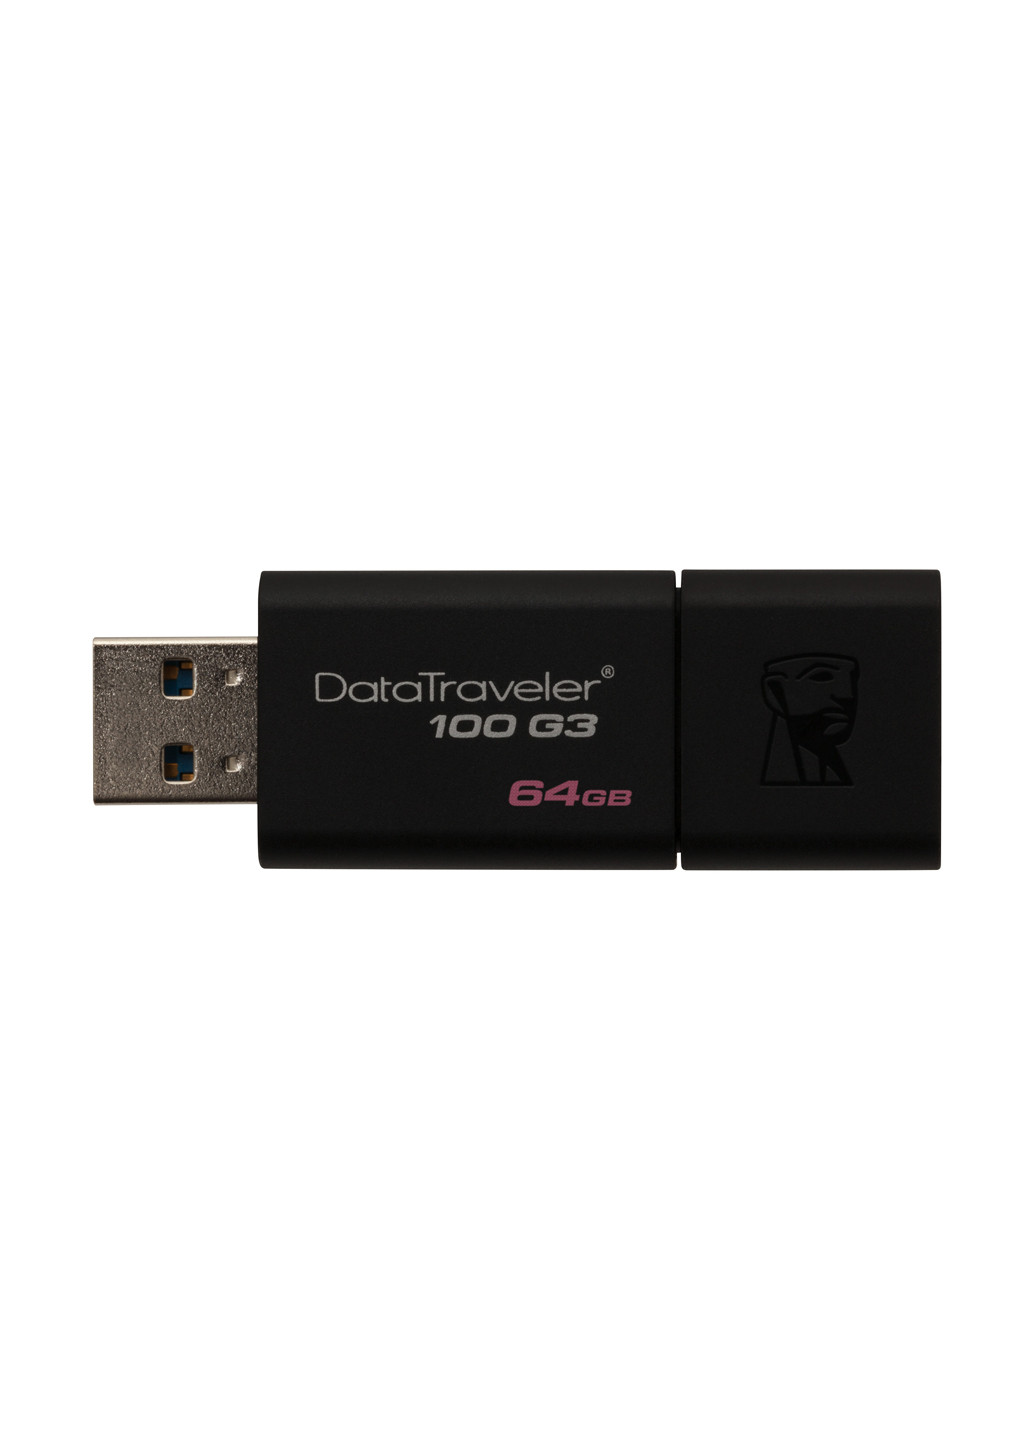 Флеш пам'ять USB DataTraveler 100 G3 64GB USB 3.0 (DT100G3 / 64GB) Kingston флеш память usb kingston datatraveler 100 g3 64gb usb 3.0 (dt100g3/64gb) (134201733)